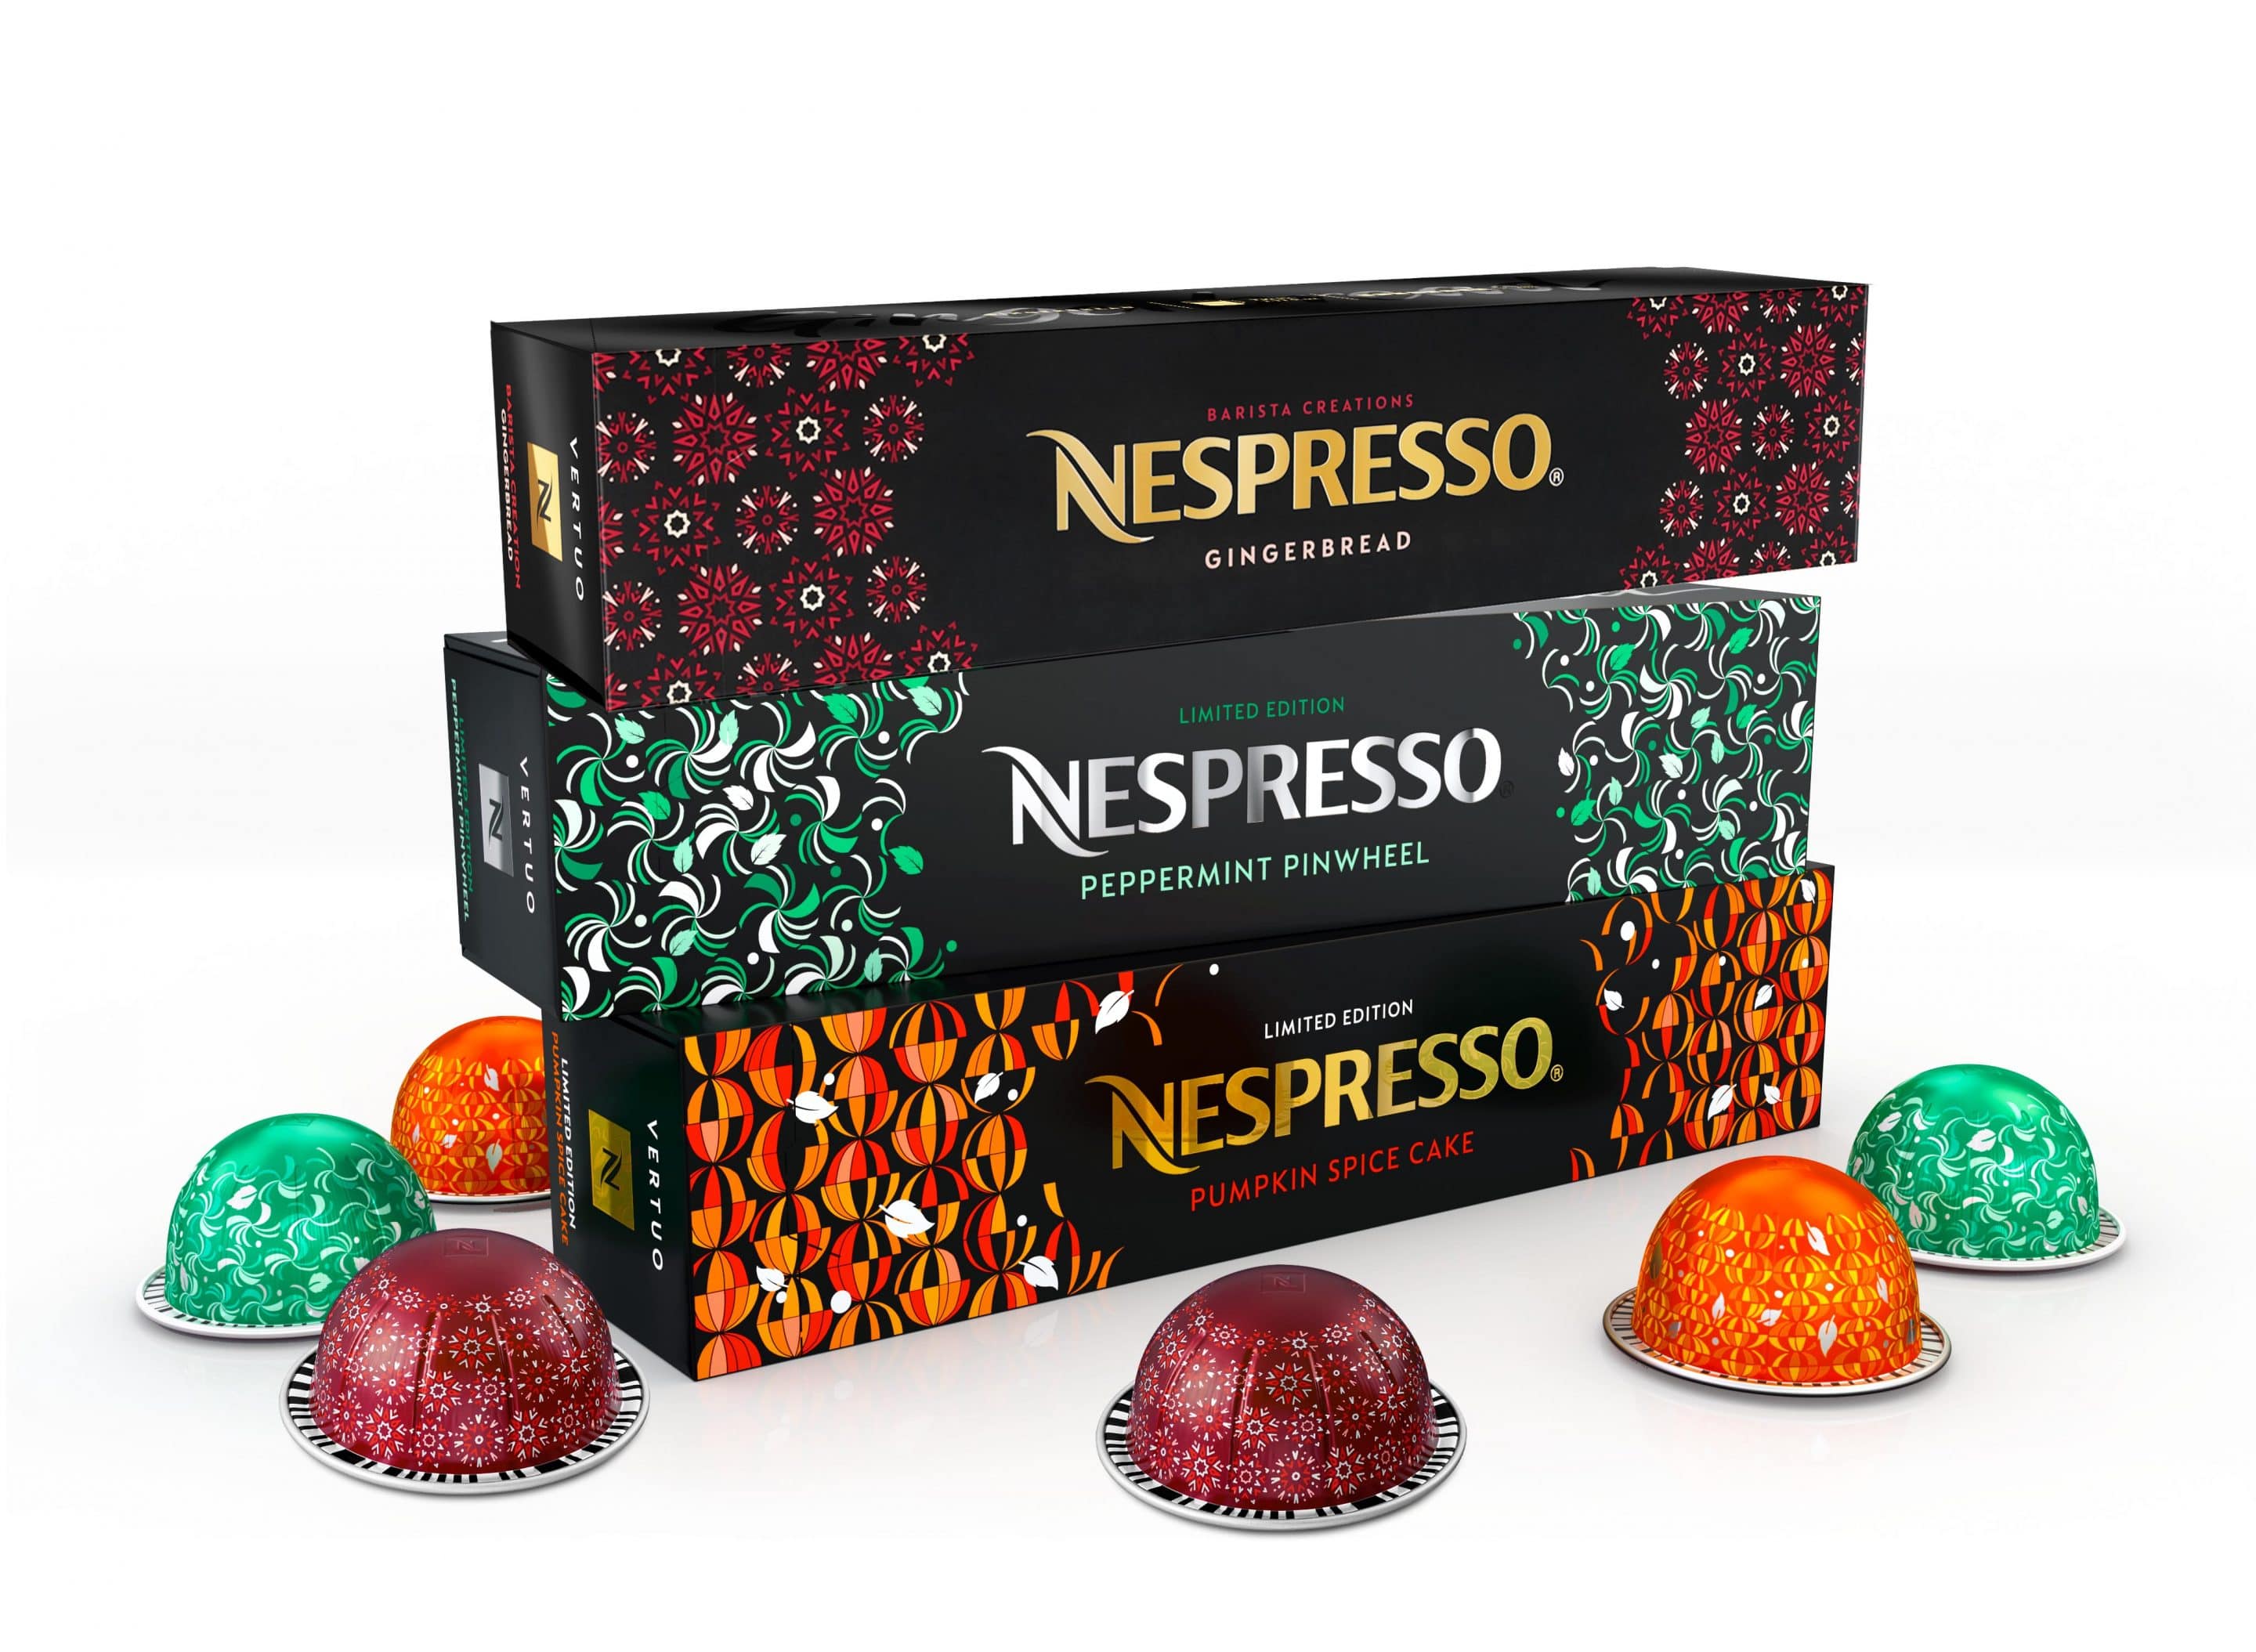 Nespresso Limited edition